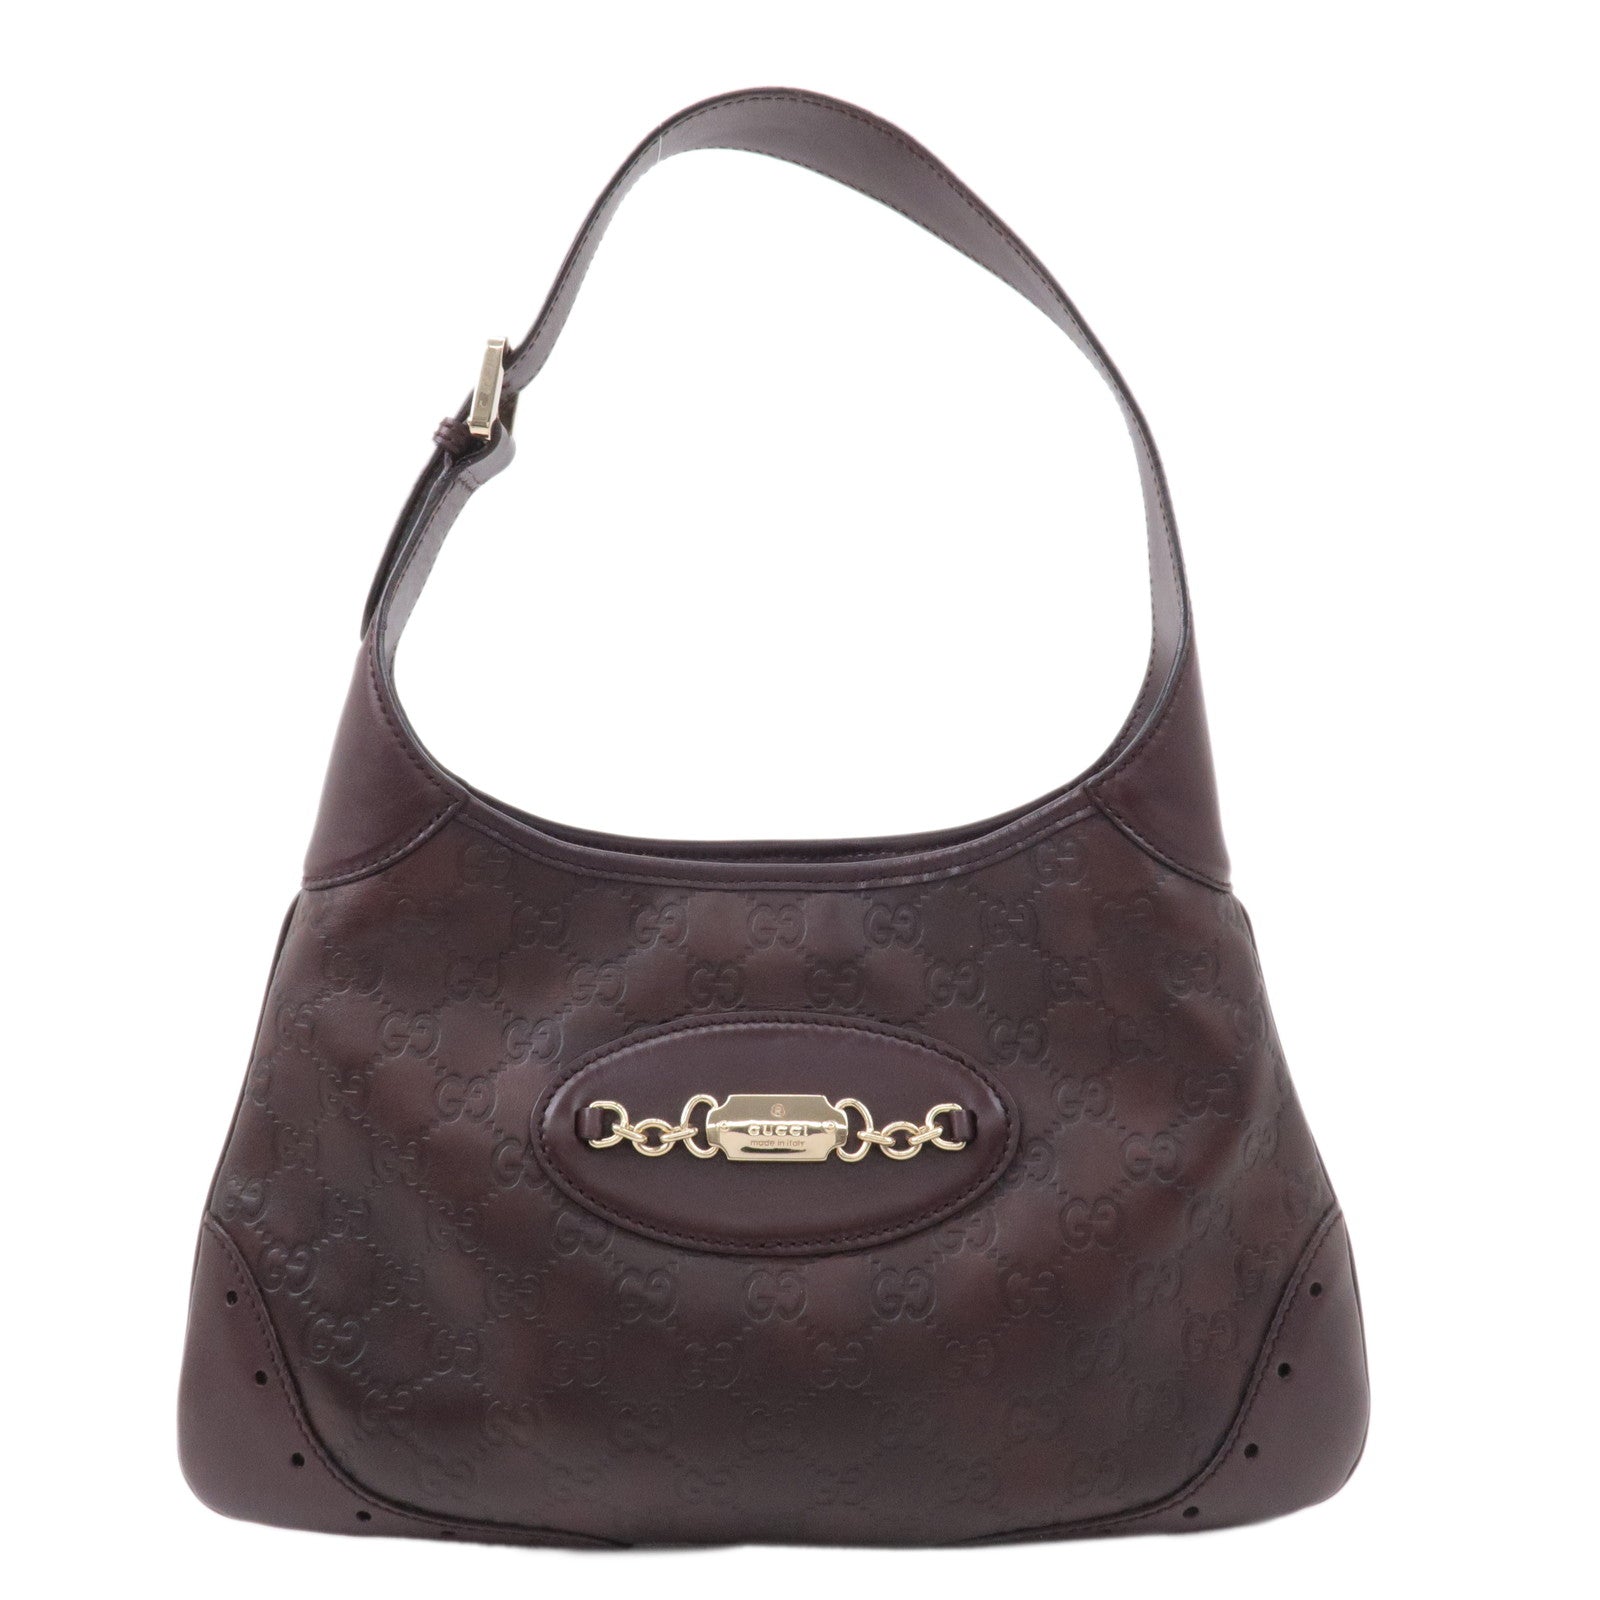 GUCCI-Guccissima-Leather-Shoulder-Bag-Hand-Bag-Brown-145778